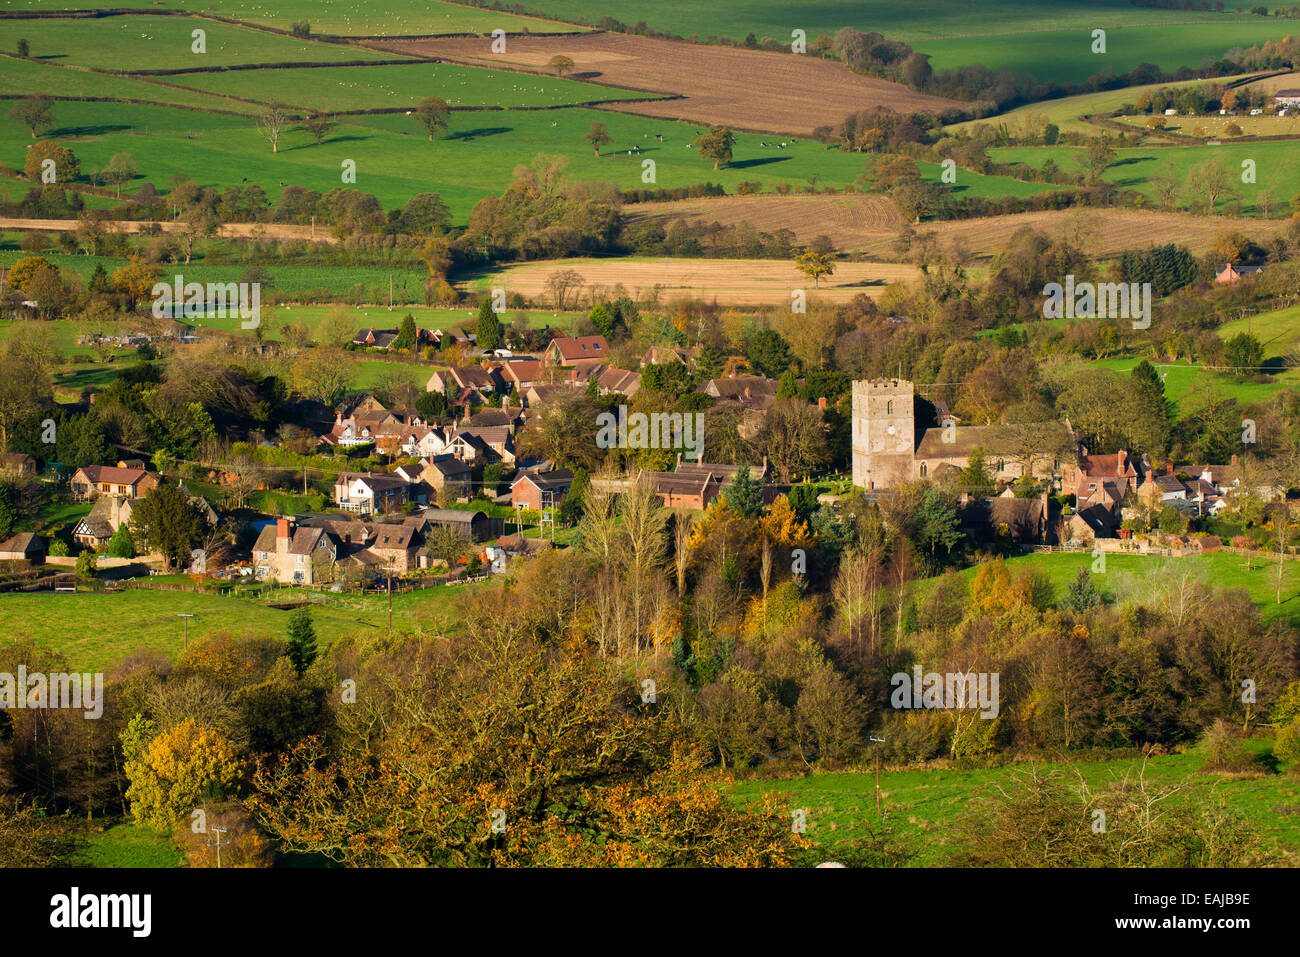 The village of Cardington in South Shropshire, England. Stock Photo